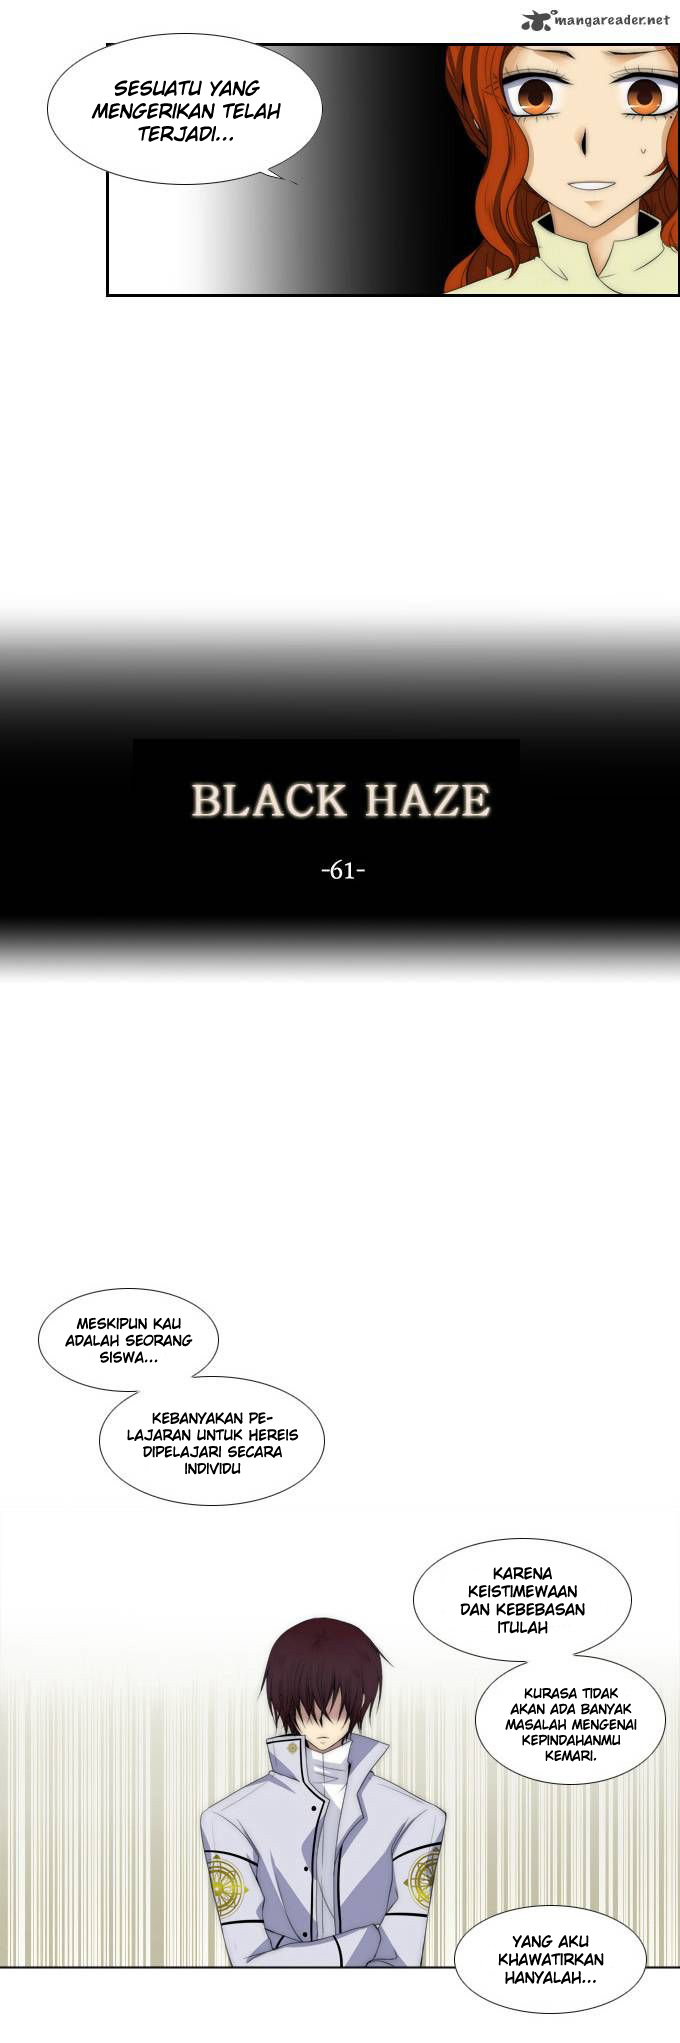 Black Haze Chapter 61